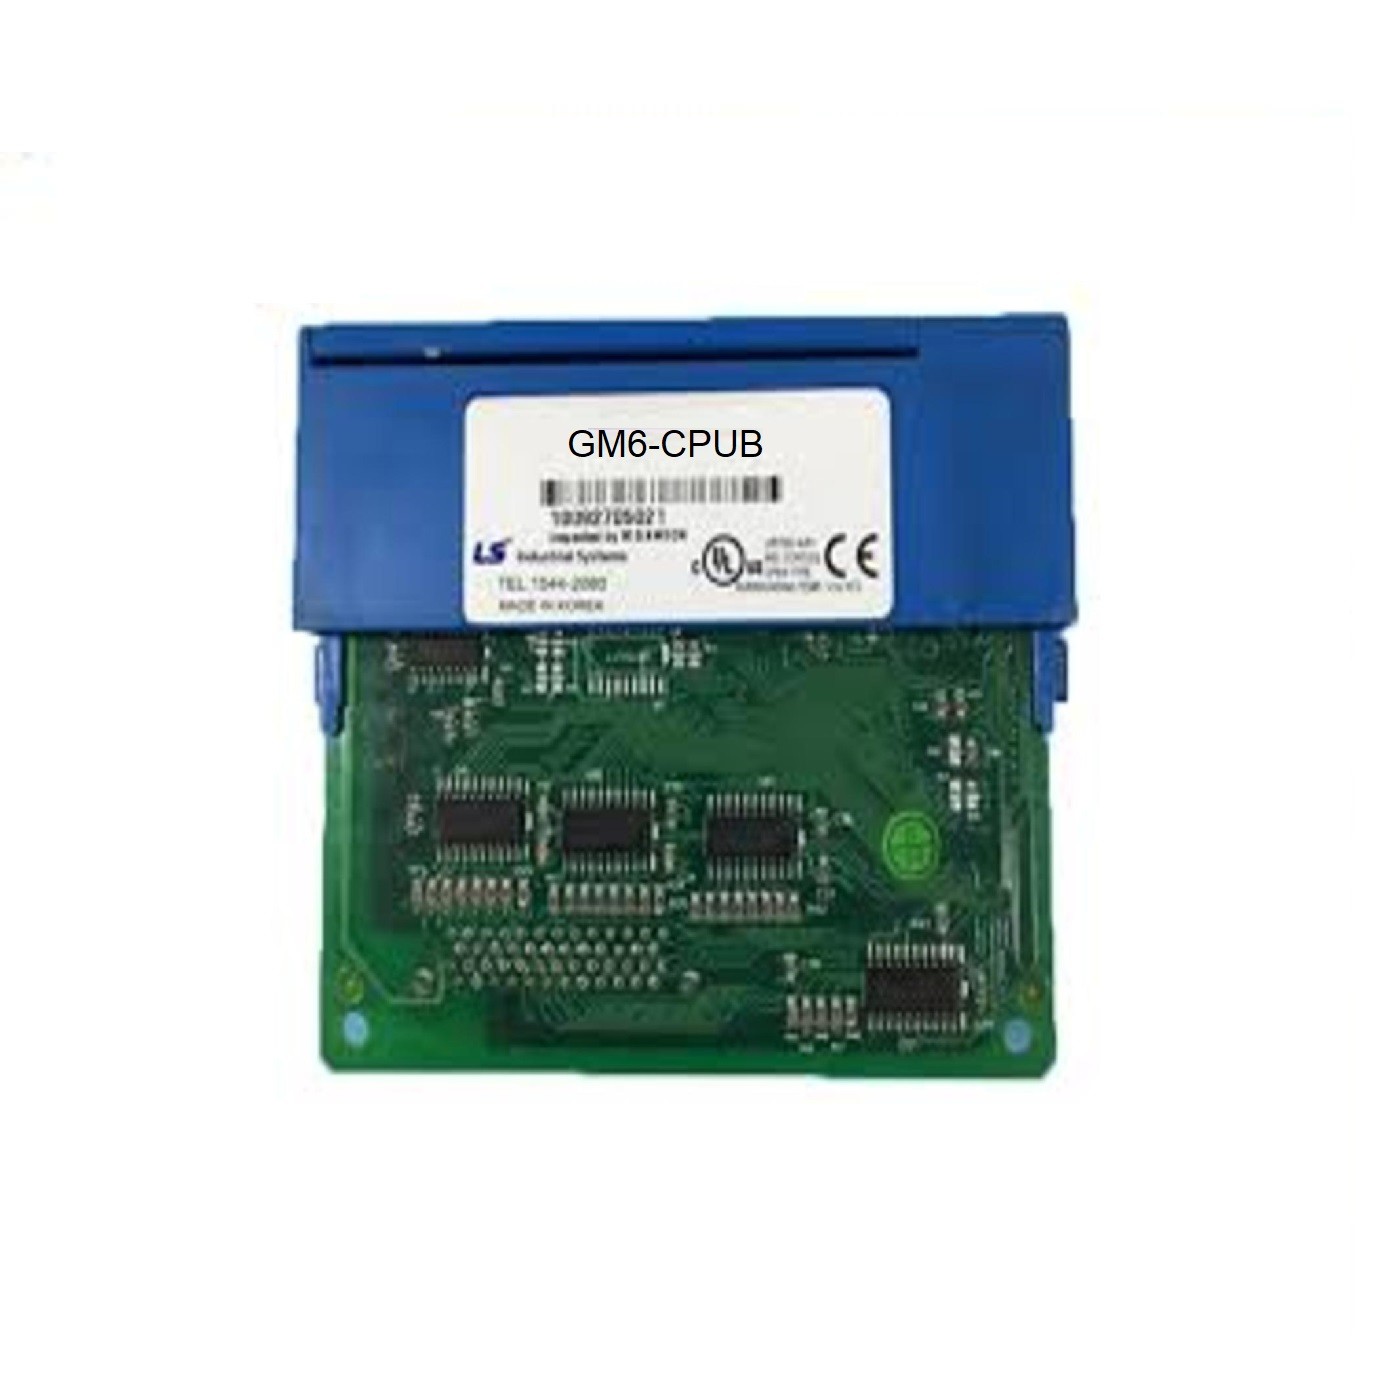 New In Box 1-Year Warranty ! LS PLC CPU Module GM6-CPUB 